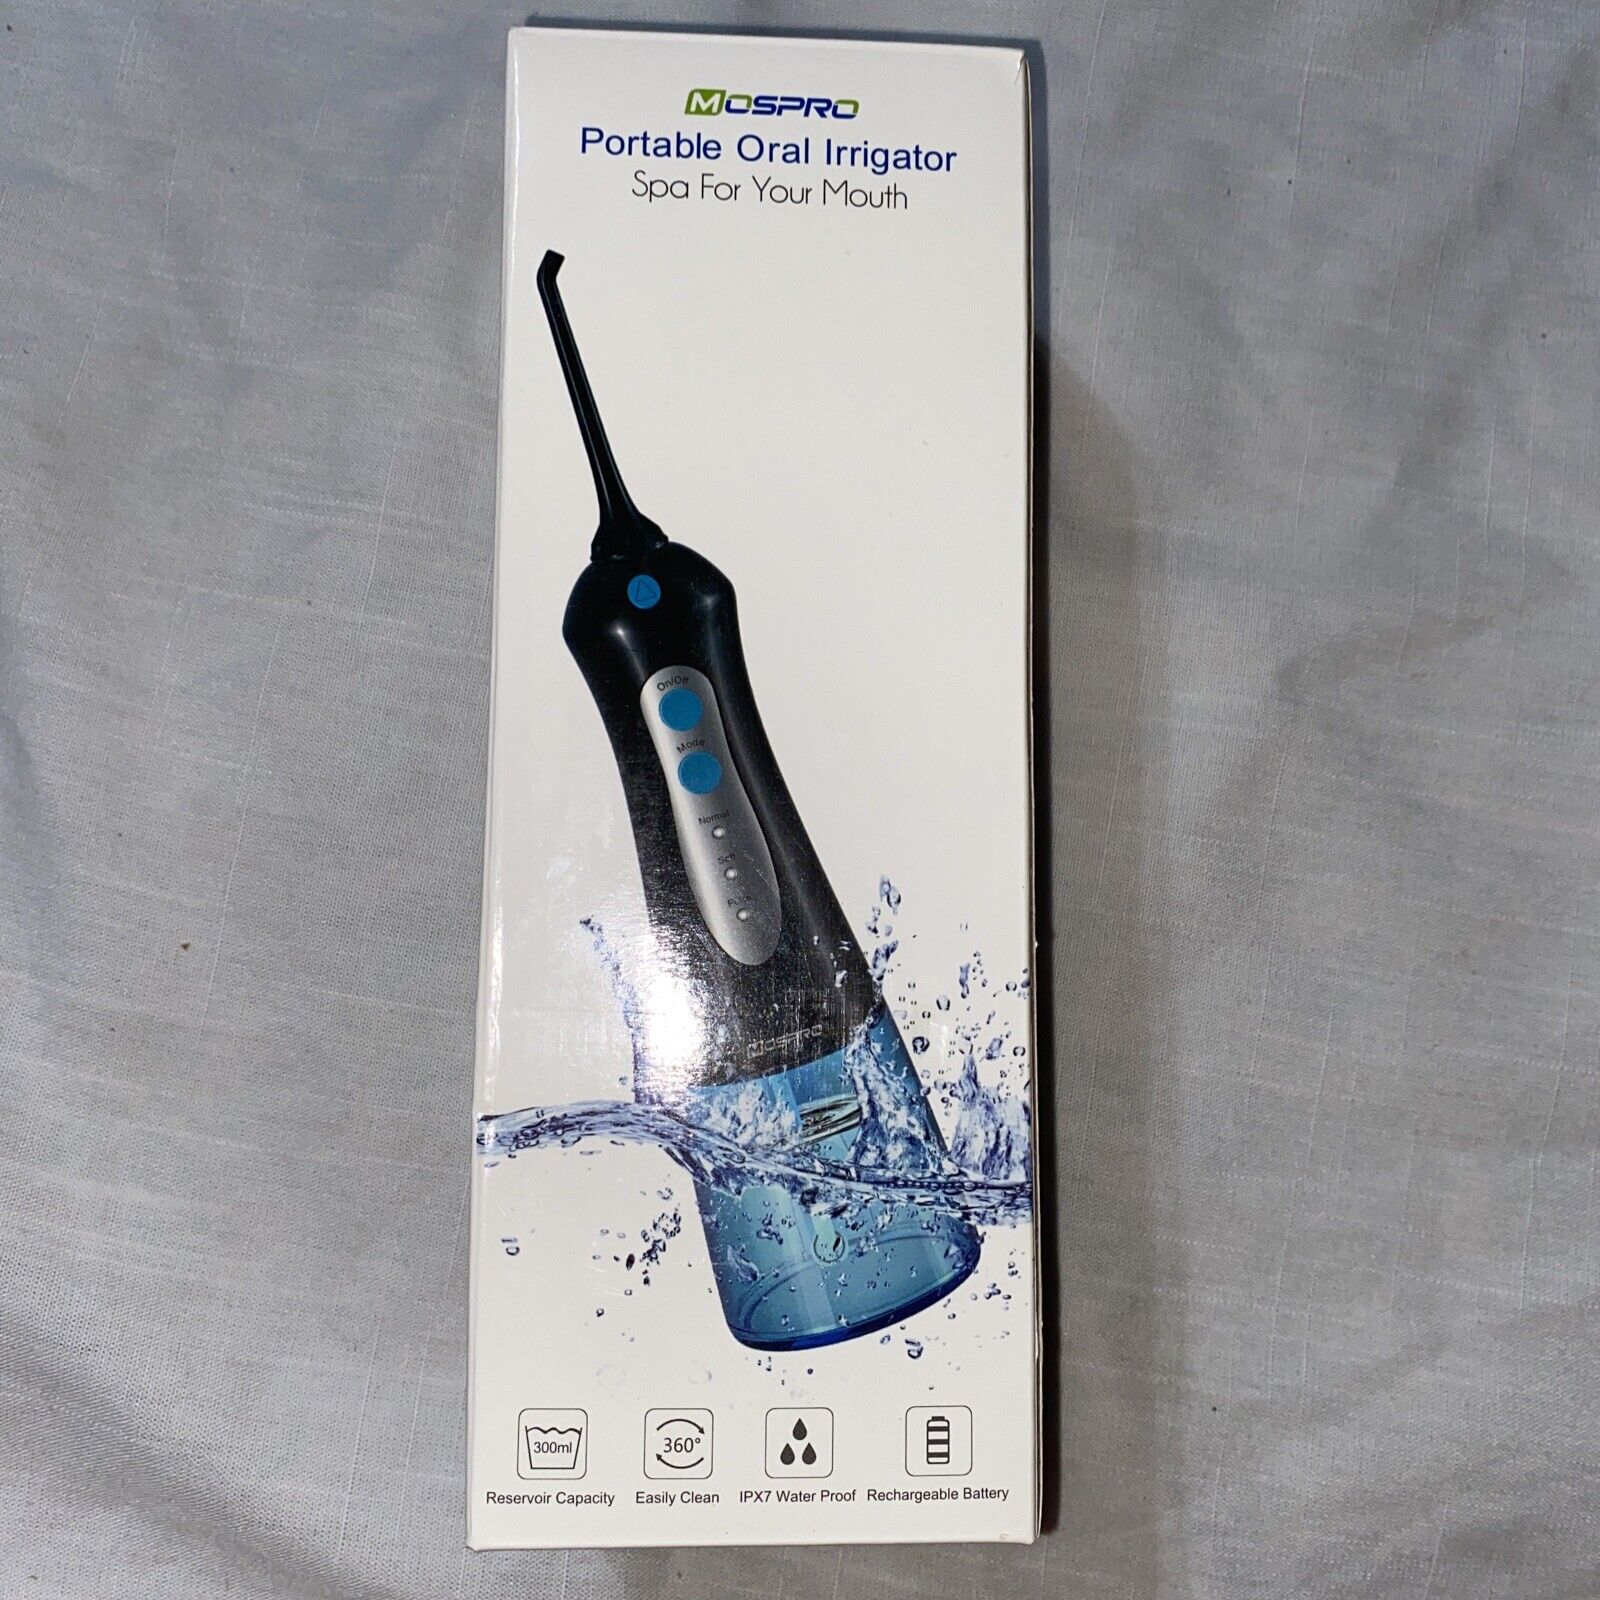 mospro portable oral irrigator | eBay